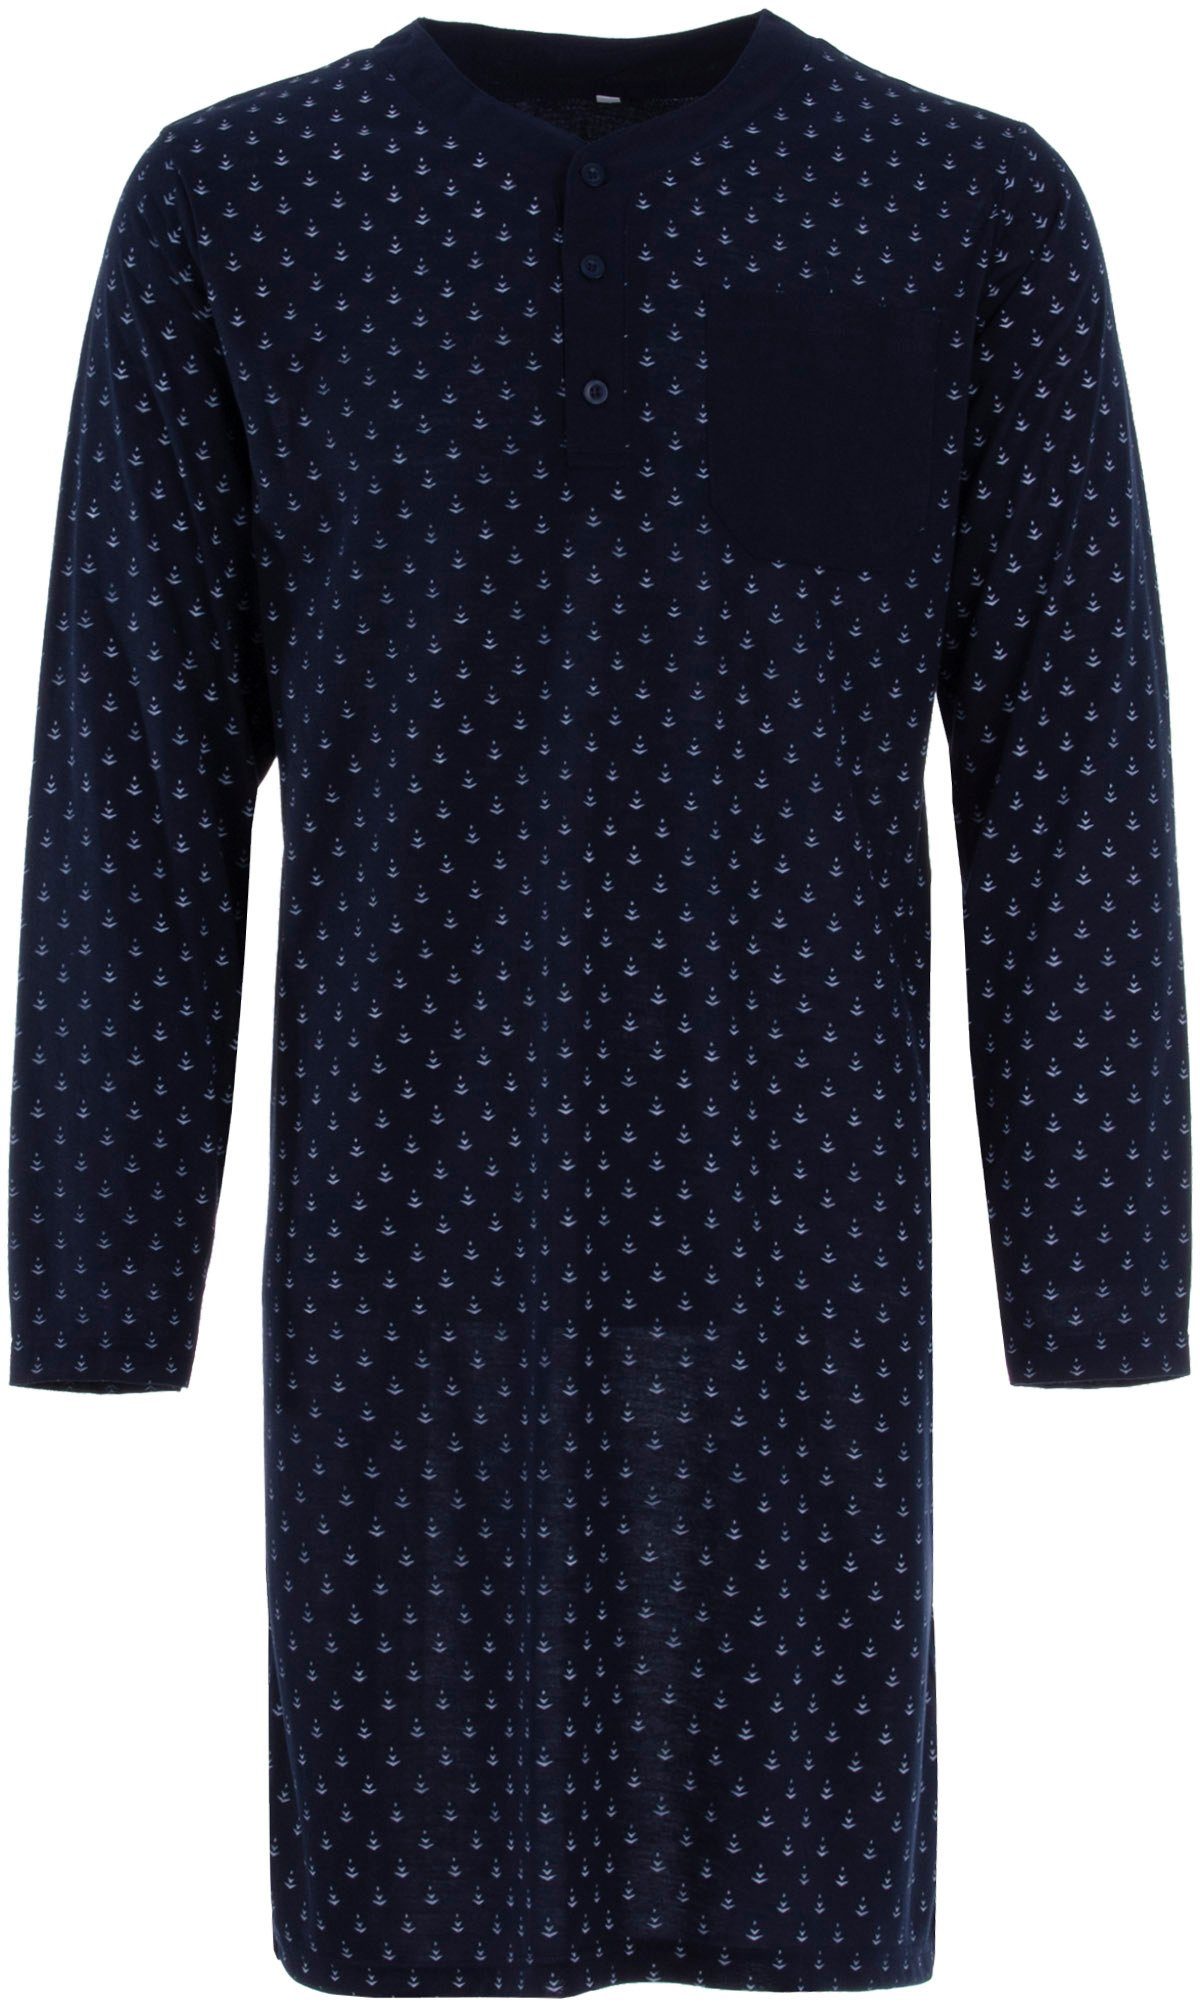 Lucky Nachthemd Nachthemd Langarm - Pfeil V- Ausschnitt mit Knopfleiste navy